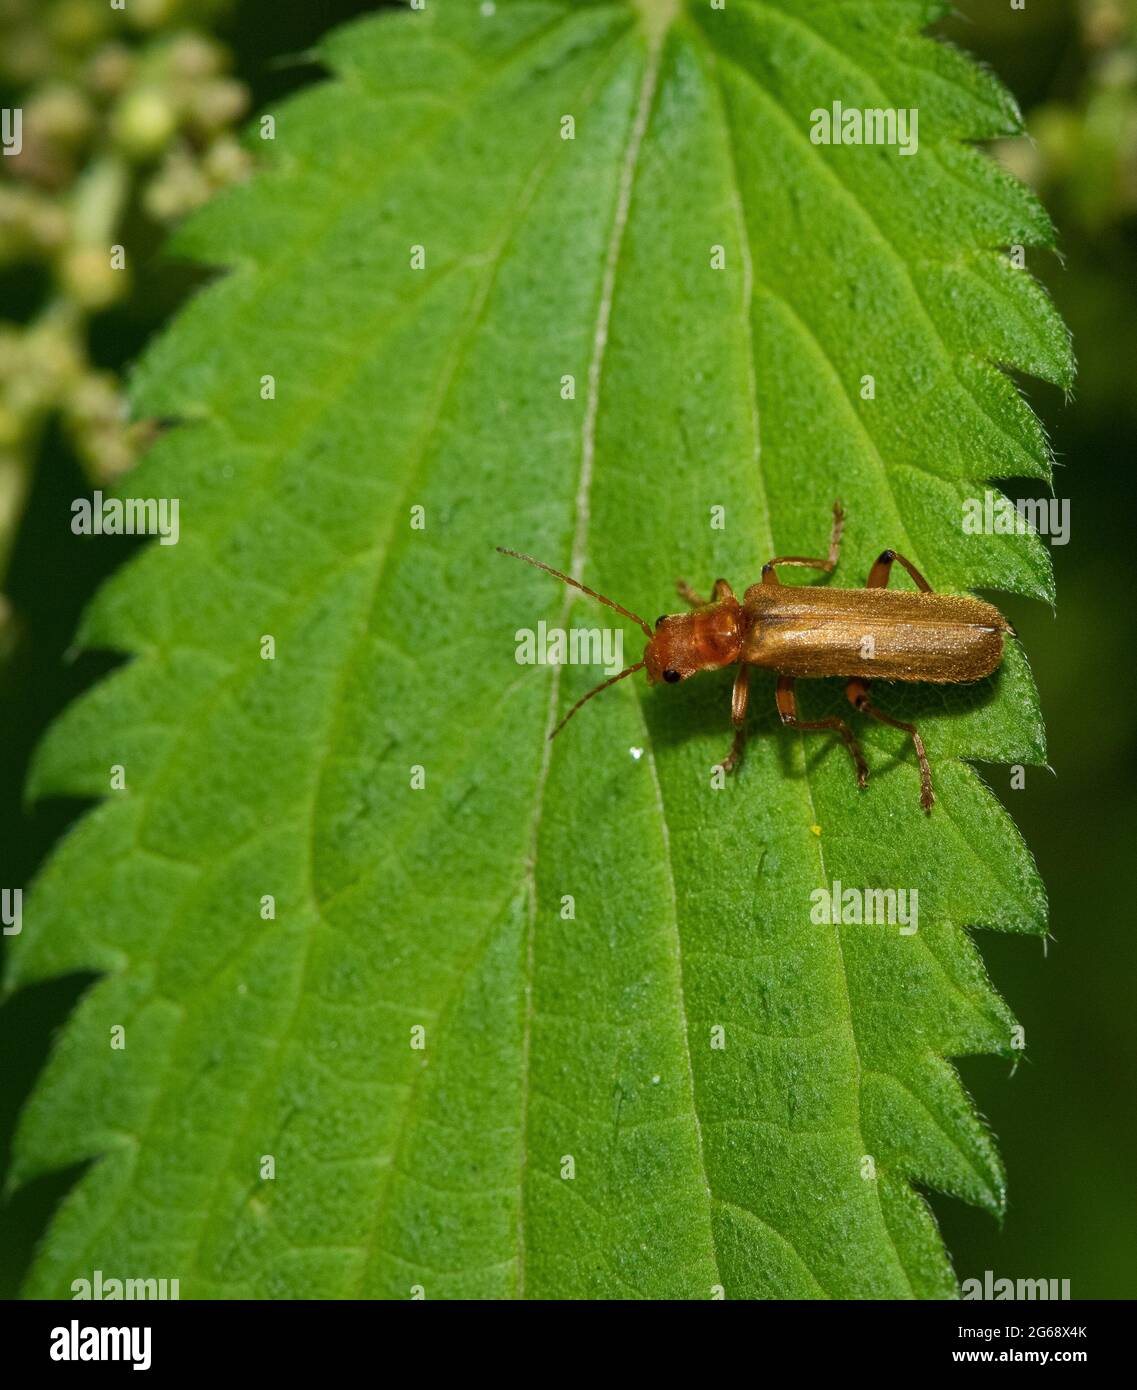 A Solidier beetle, Chipping, Preston, Lancashire, UK Stock Photo